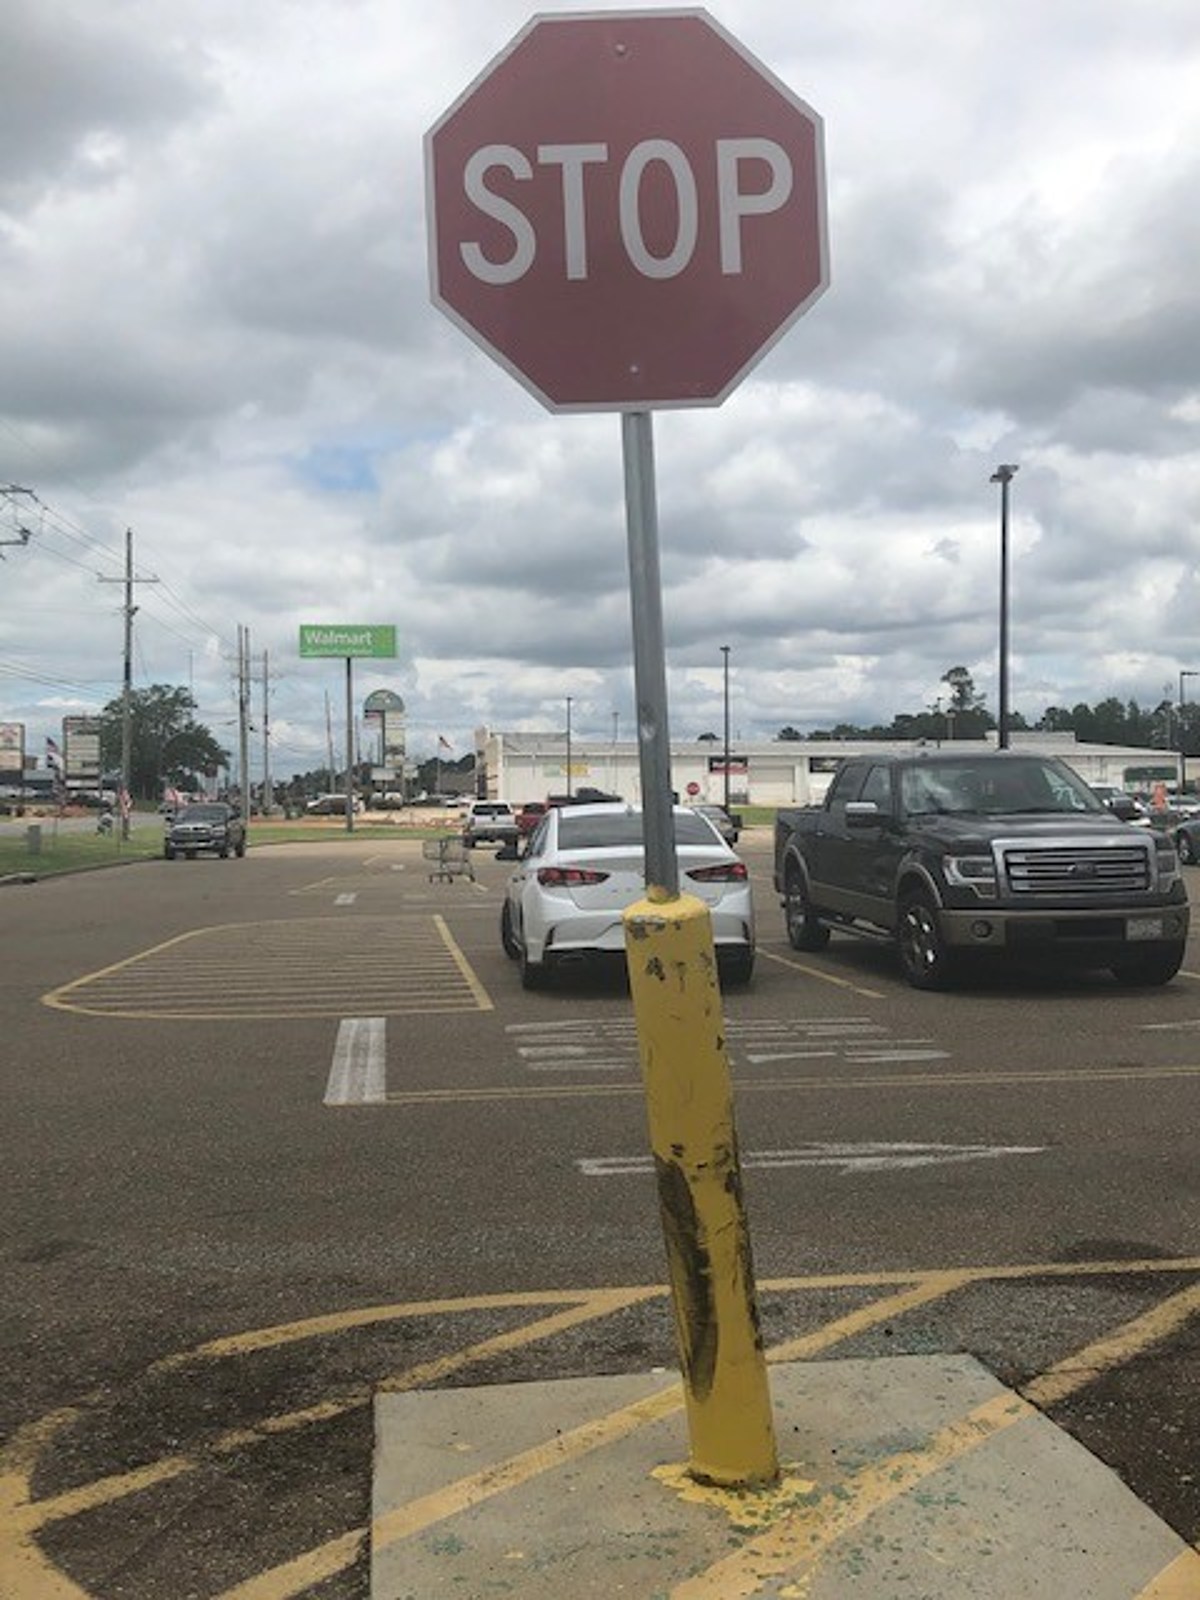 The Infamous Walmart Pole Strikes Again